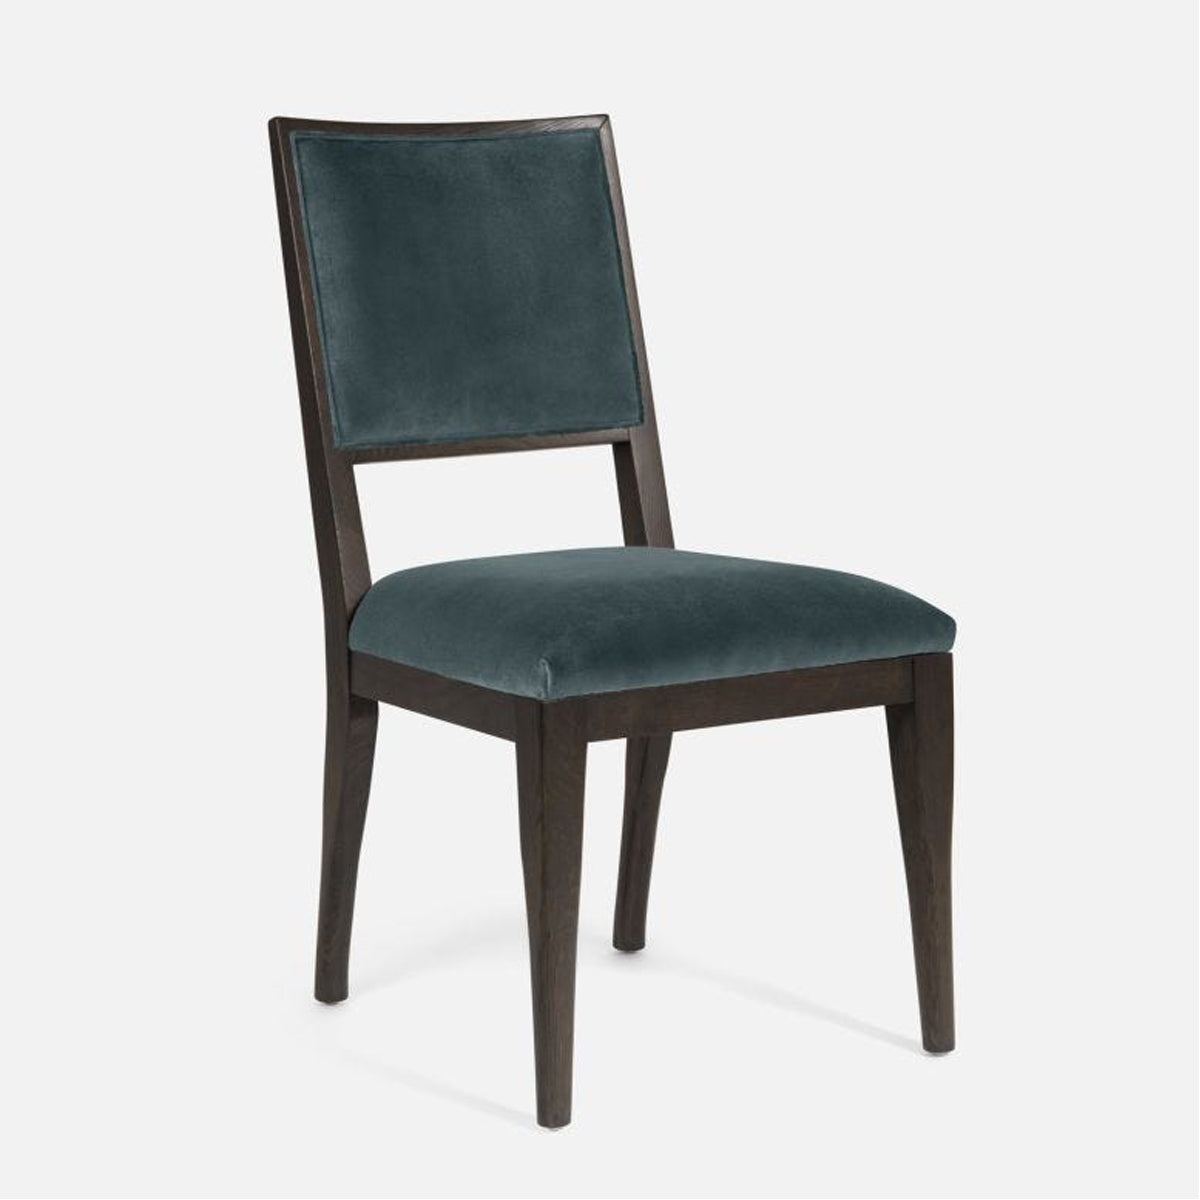 Made Goods Nelton Upholstered Dining Chair in Brenta Cotton/Jute